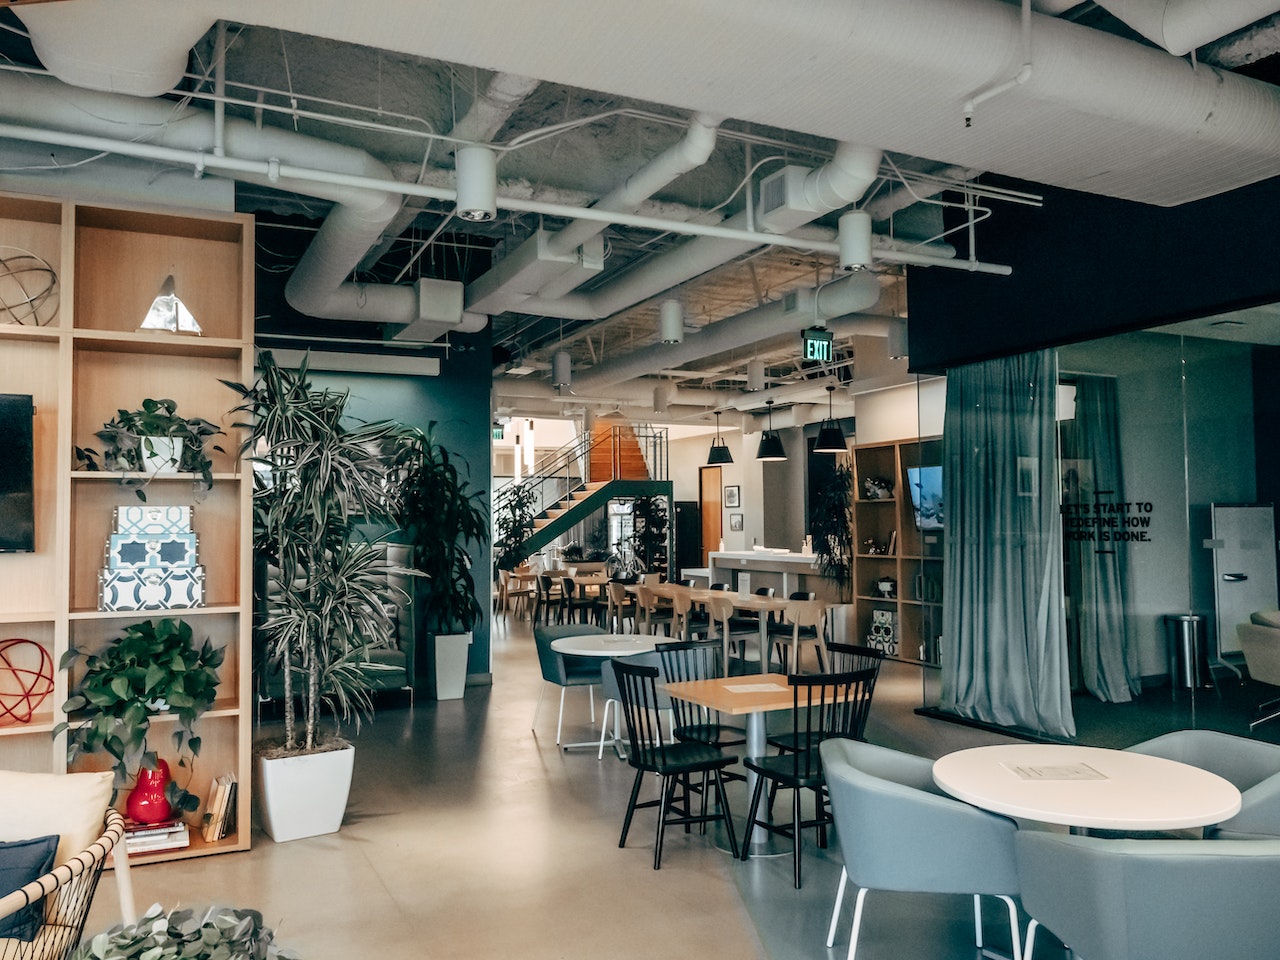 Café Architecture: Important Tips to Design a Cafe